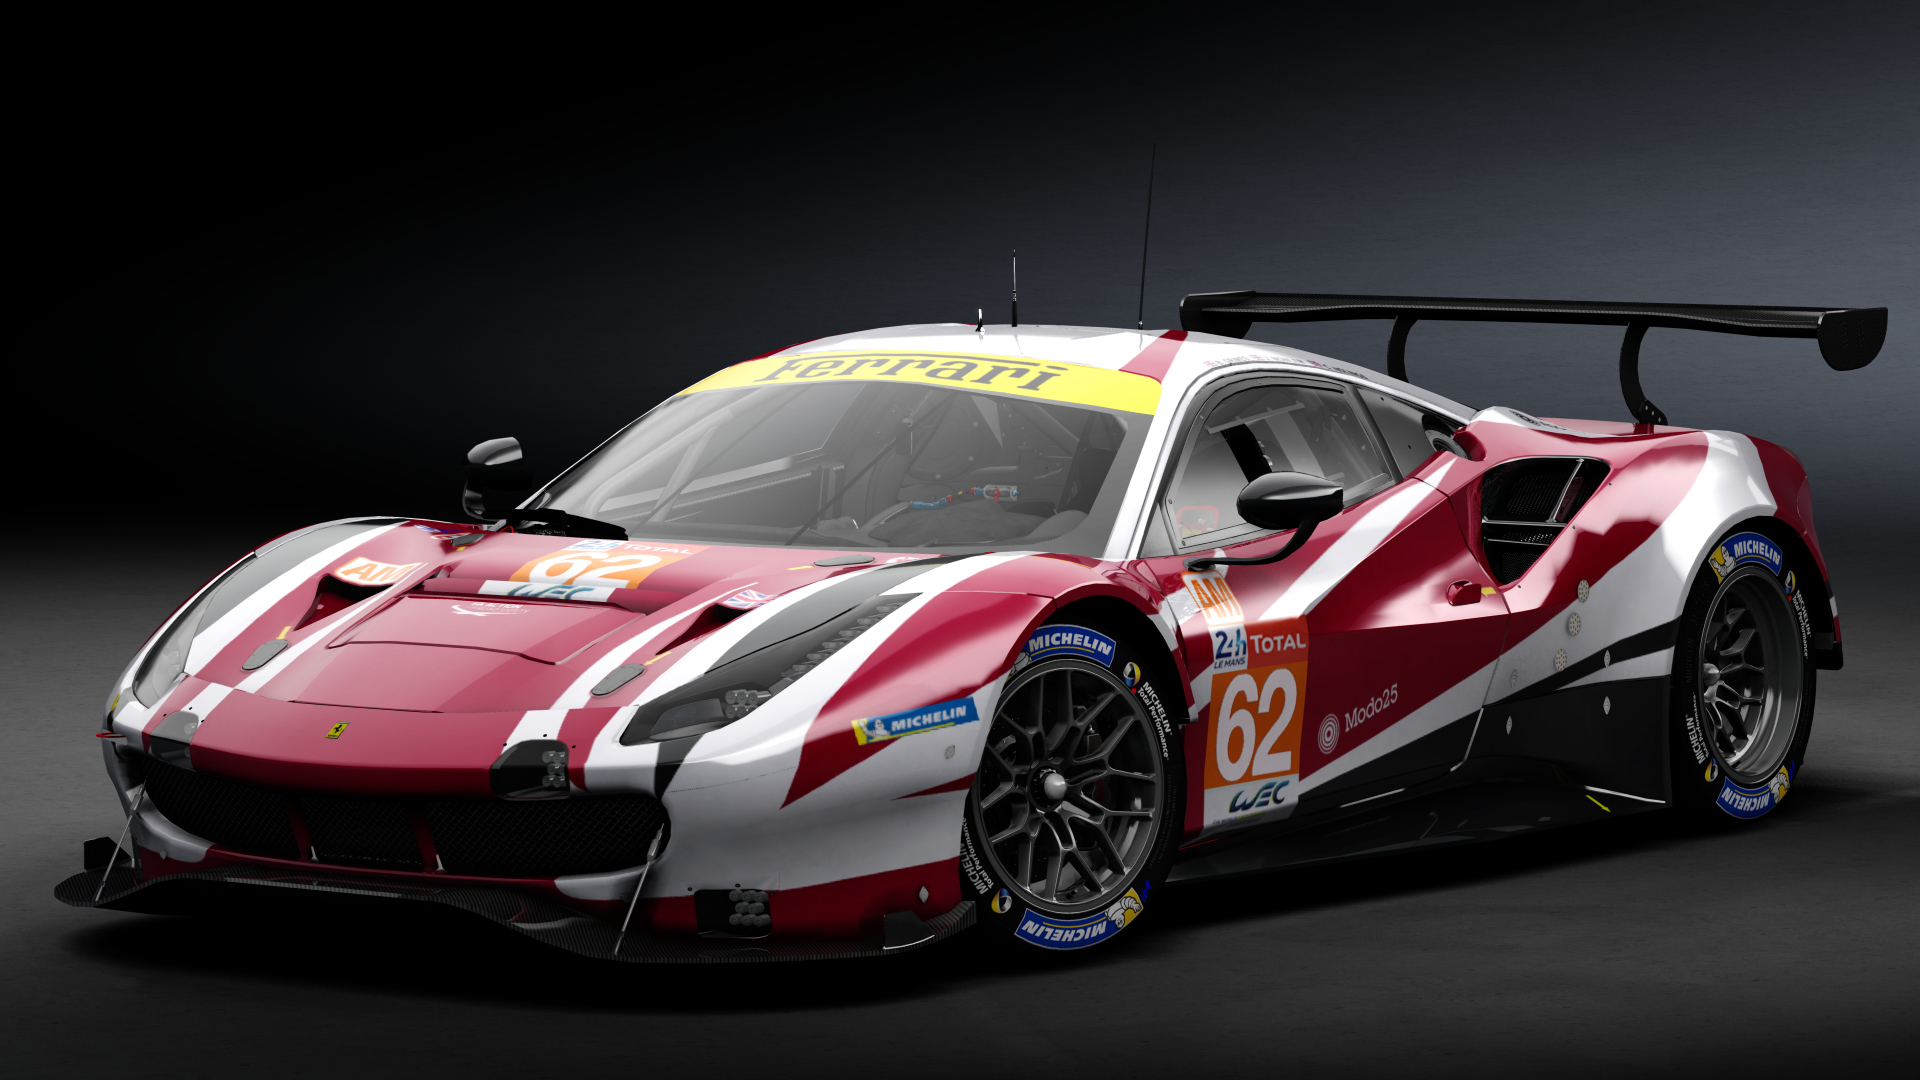 2018 Ferrari 488 GTE Evo Le Mans Spec [Michelotto], skin 2020 #62 LM Red River Sport LM24